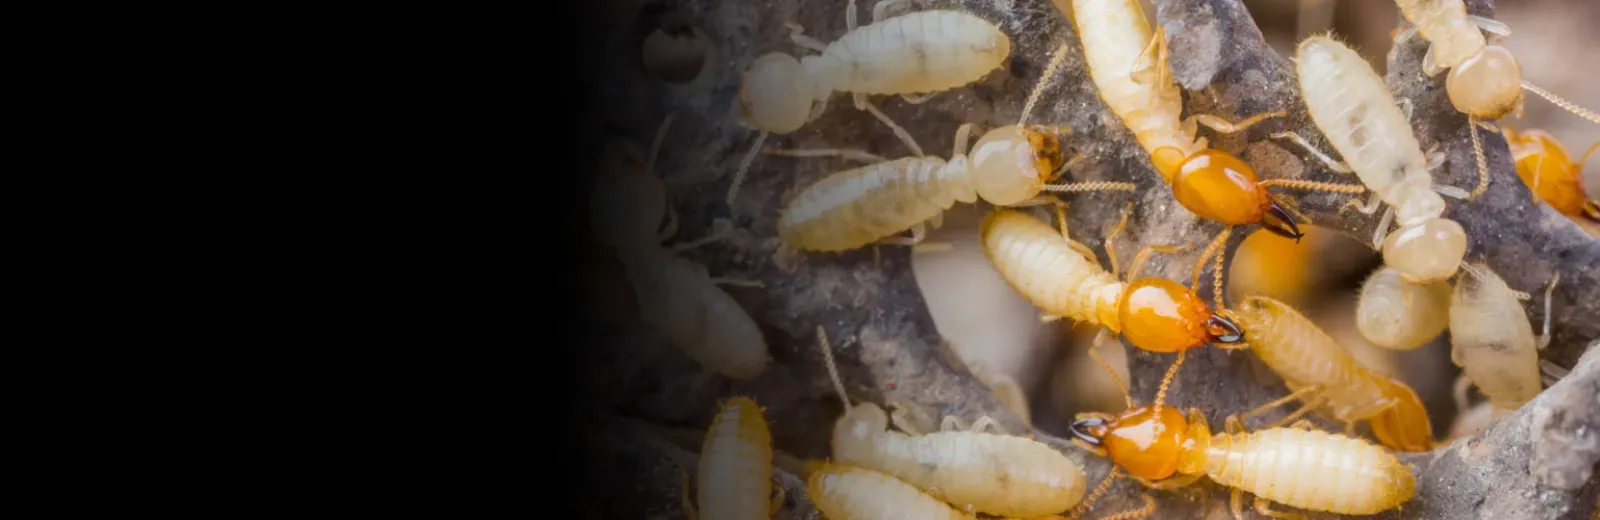 Close up shot of termites